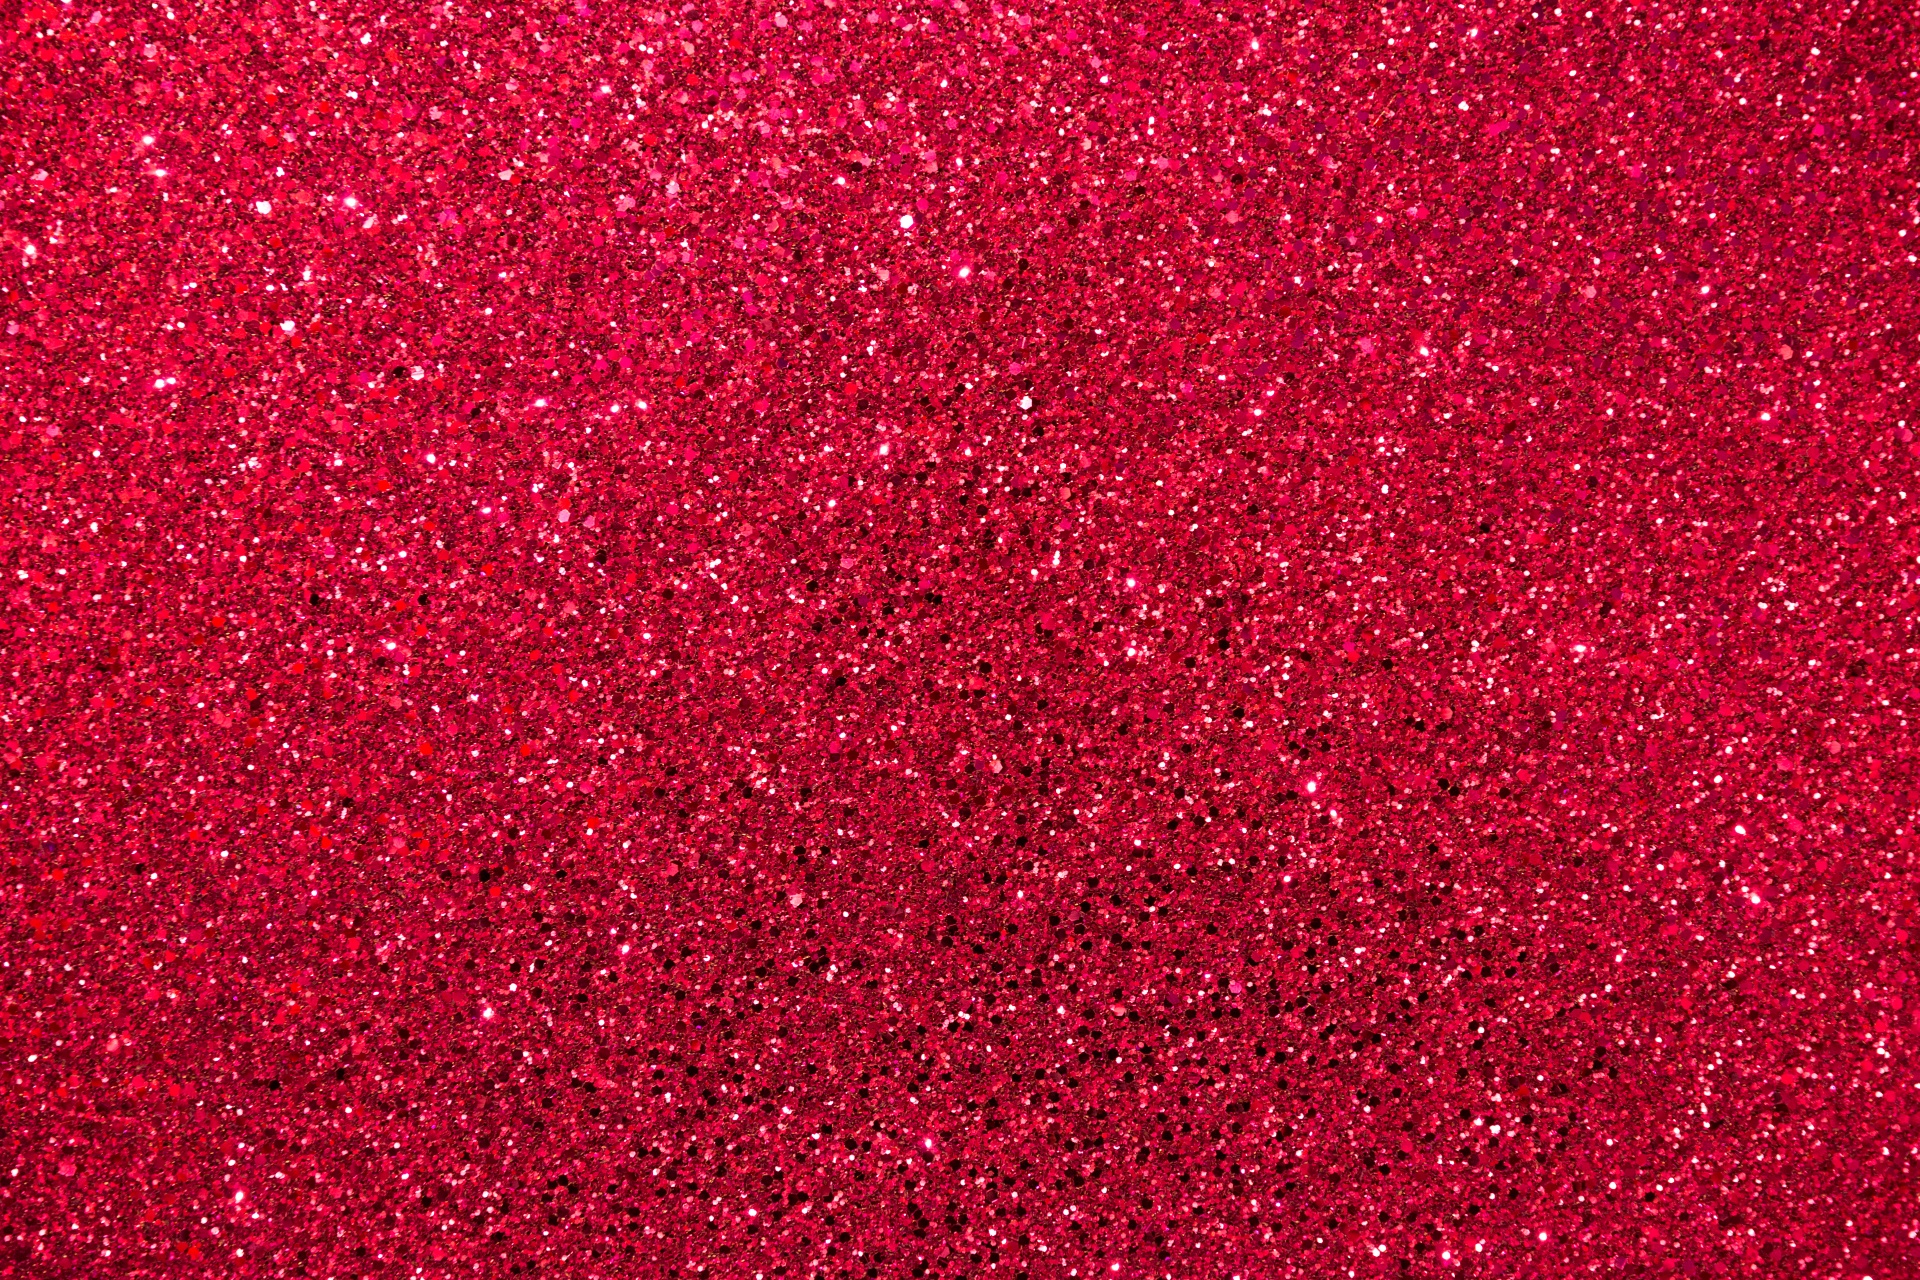 Red Glitter Background